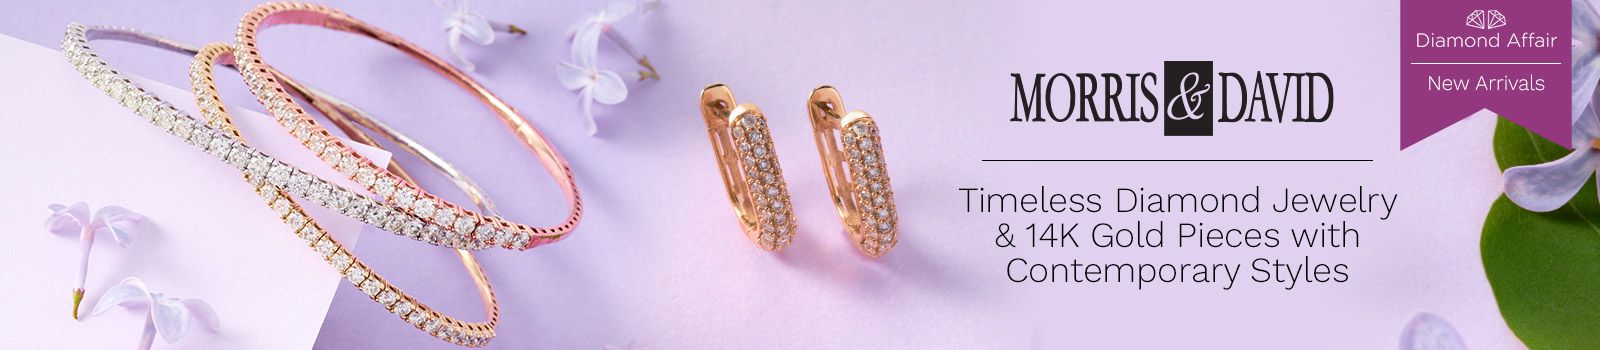 Morris & David | Timeless Diamond Jewelry & 14K Gold Pieces with Contemporary Styles, 209-095, 213-562